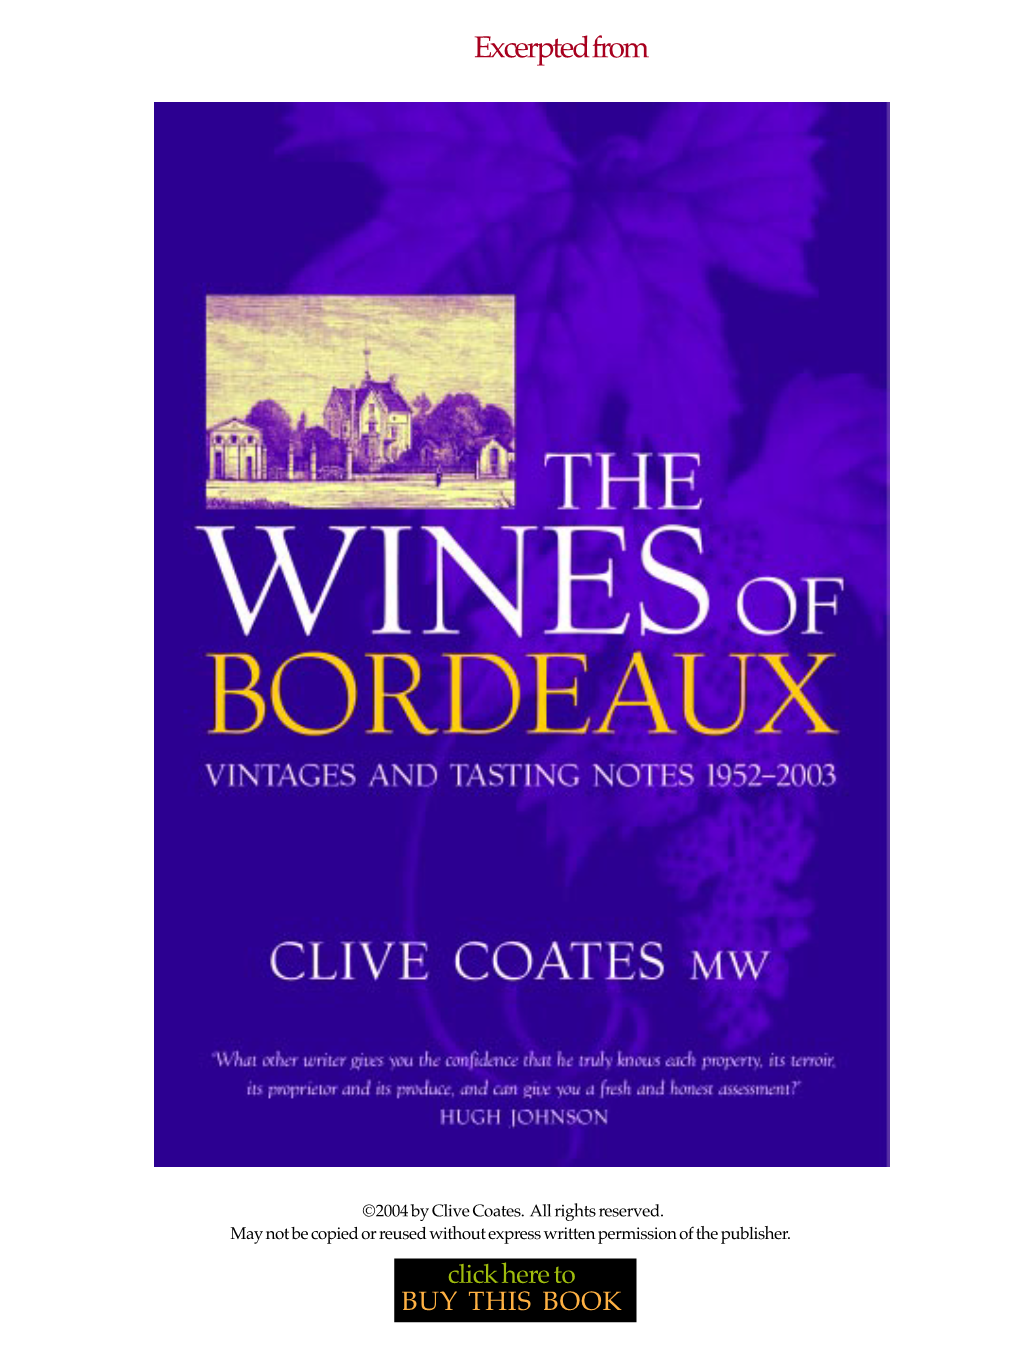 00/Wines of Bordeaux PRE/INTRO